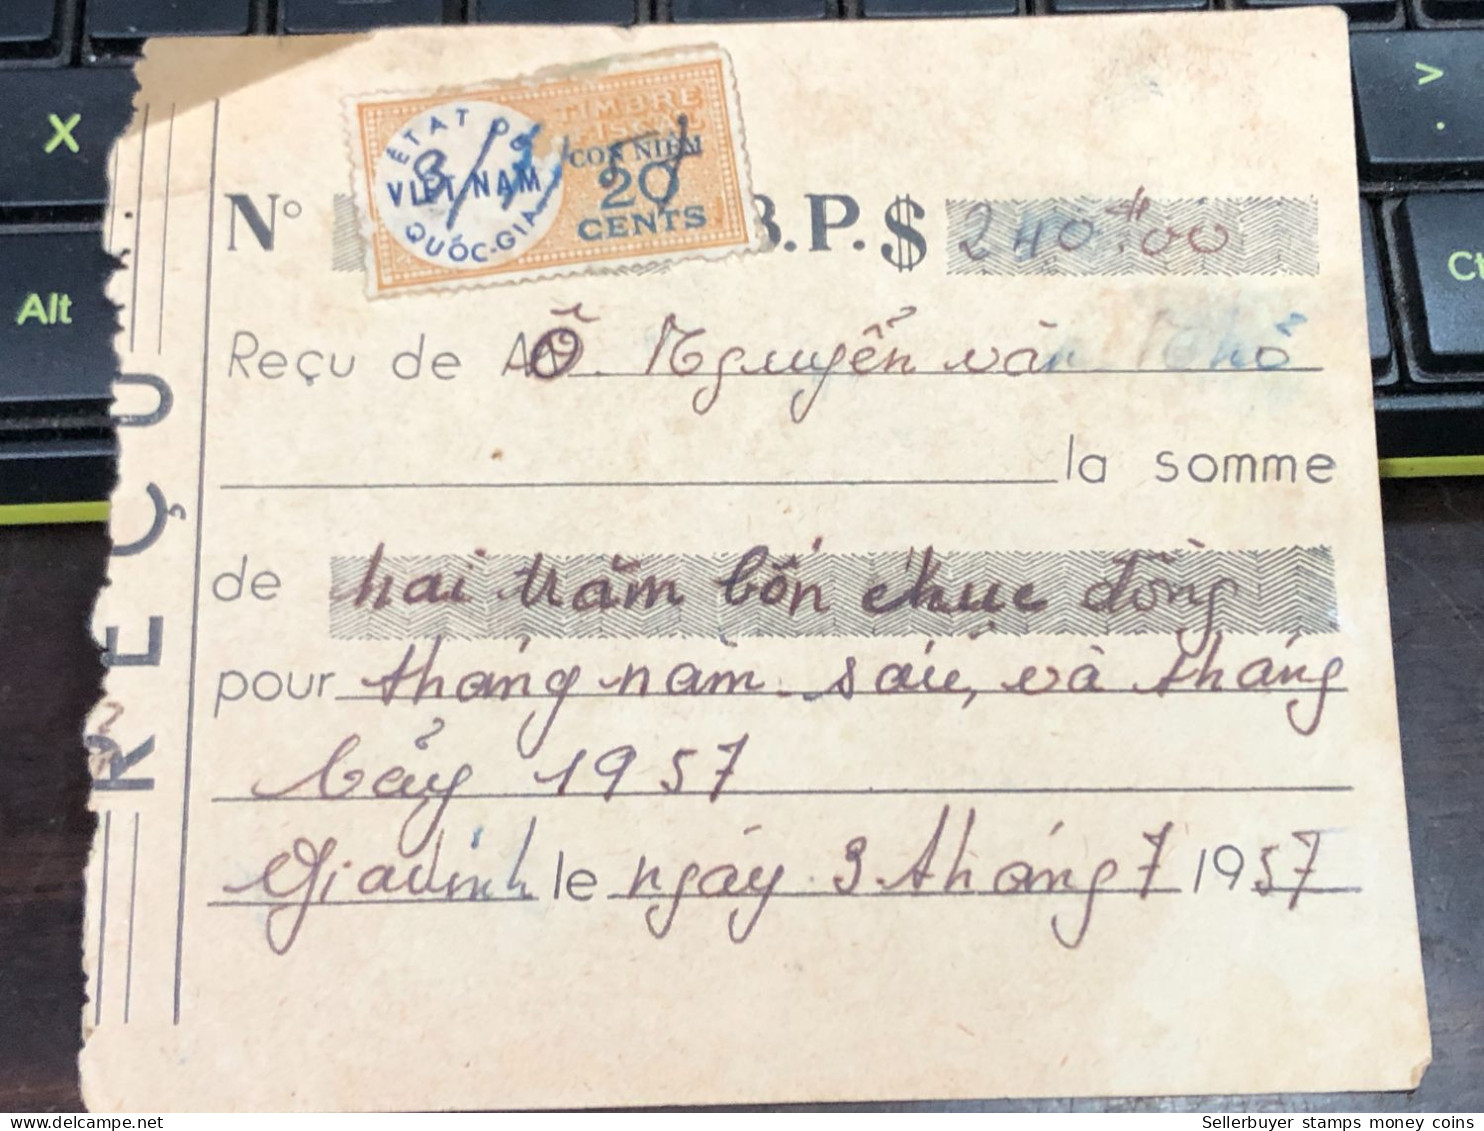 Viet Nam Suoth Old Bank Receipt(have Wedge  $20 Sents Year 1957) PAPER QUALITY:GOOD 1-PCS - Sammlungen